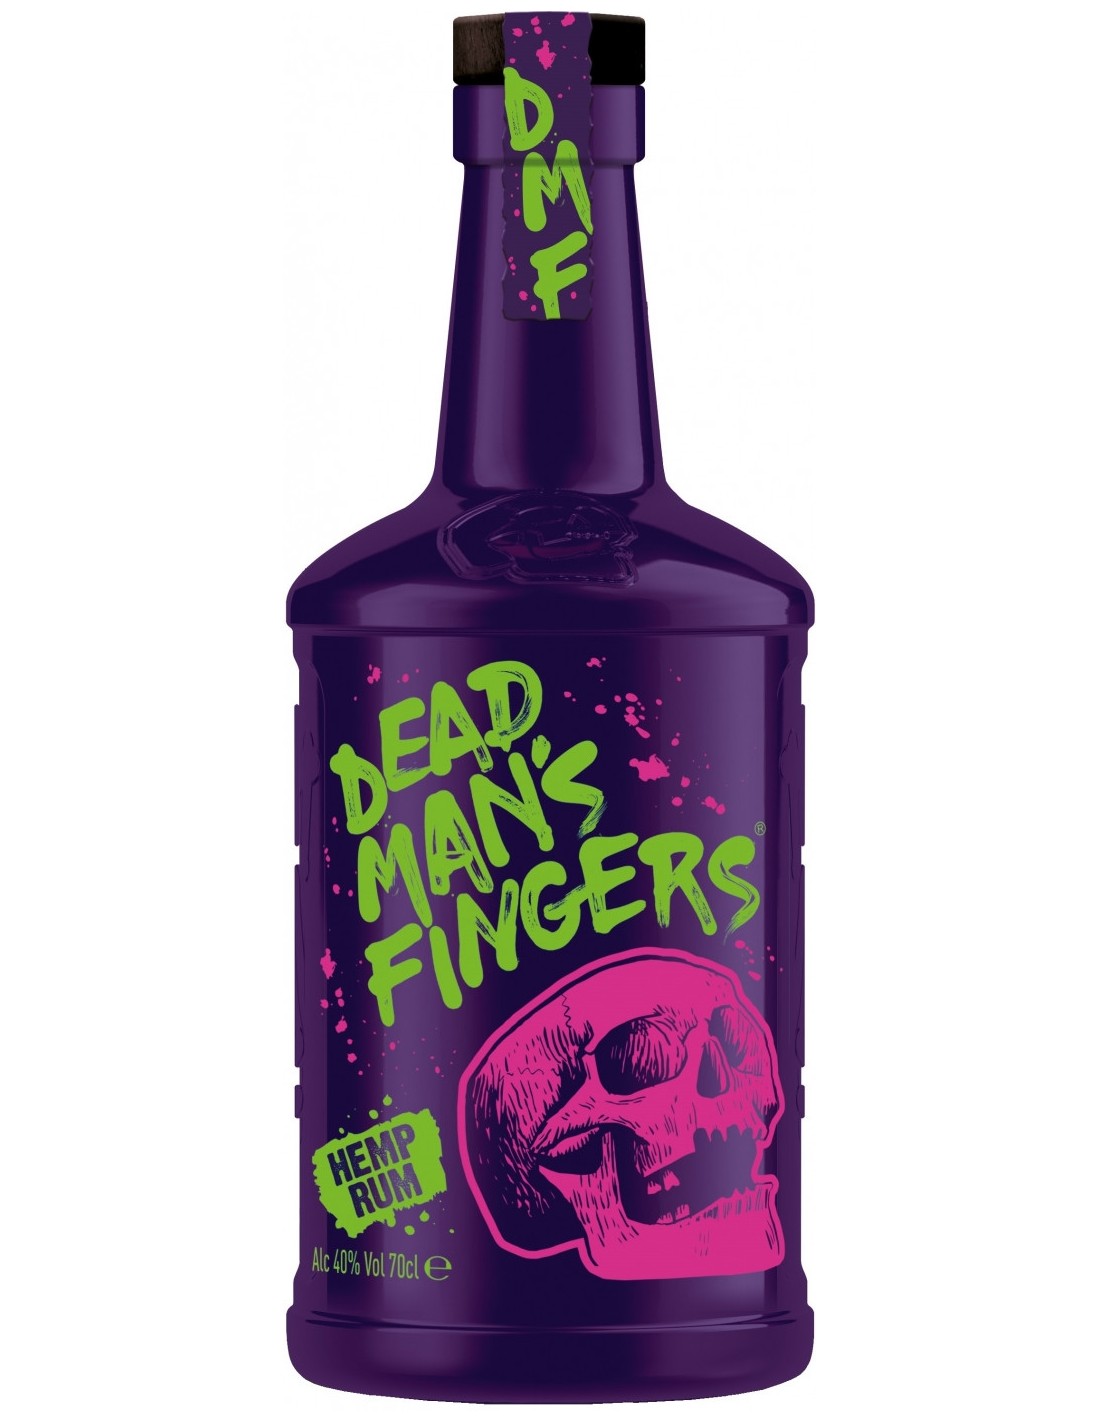 Rom Dead Mans Fingers, 40% alc., 0.7L, Anglia